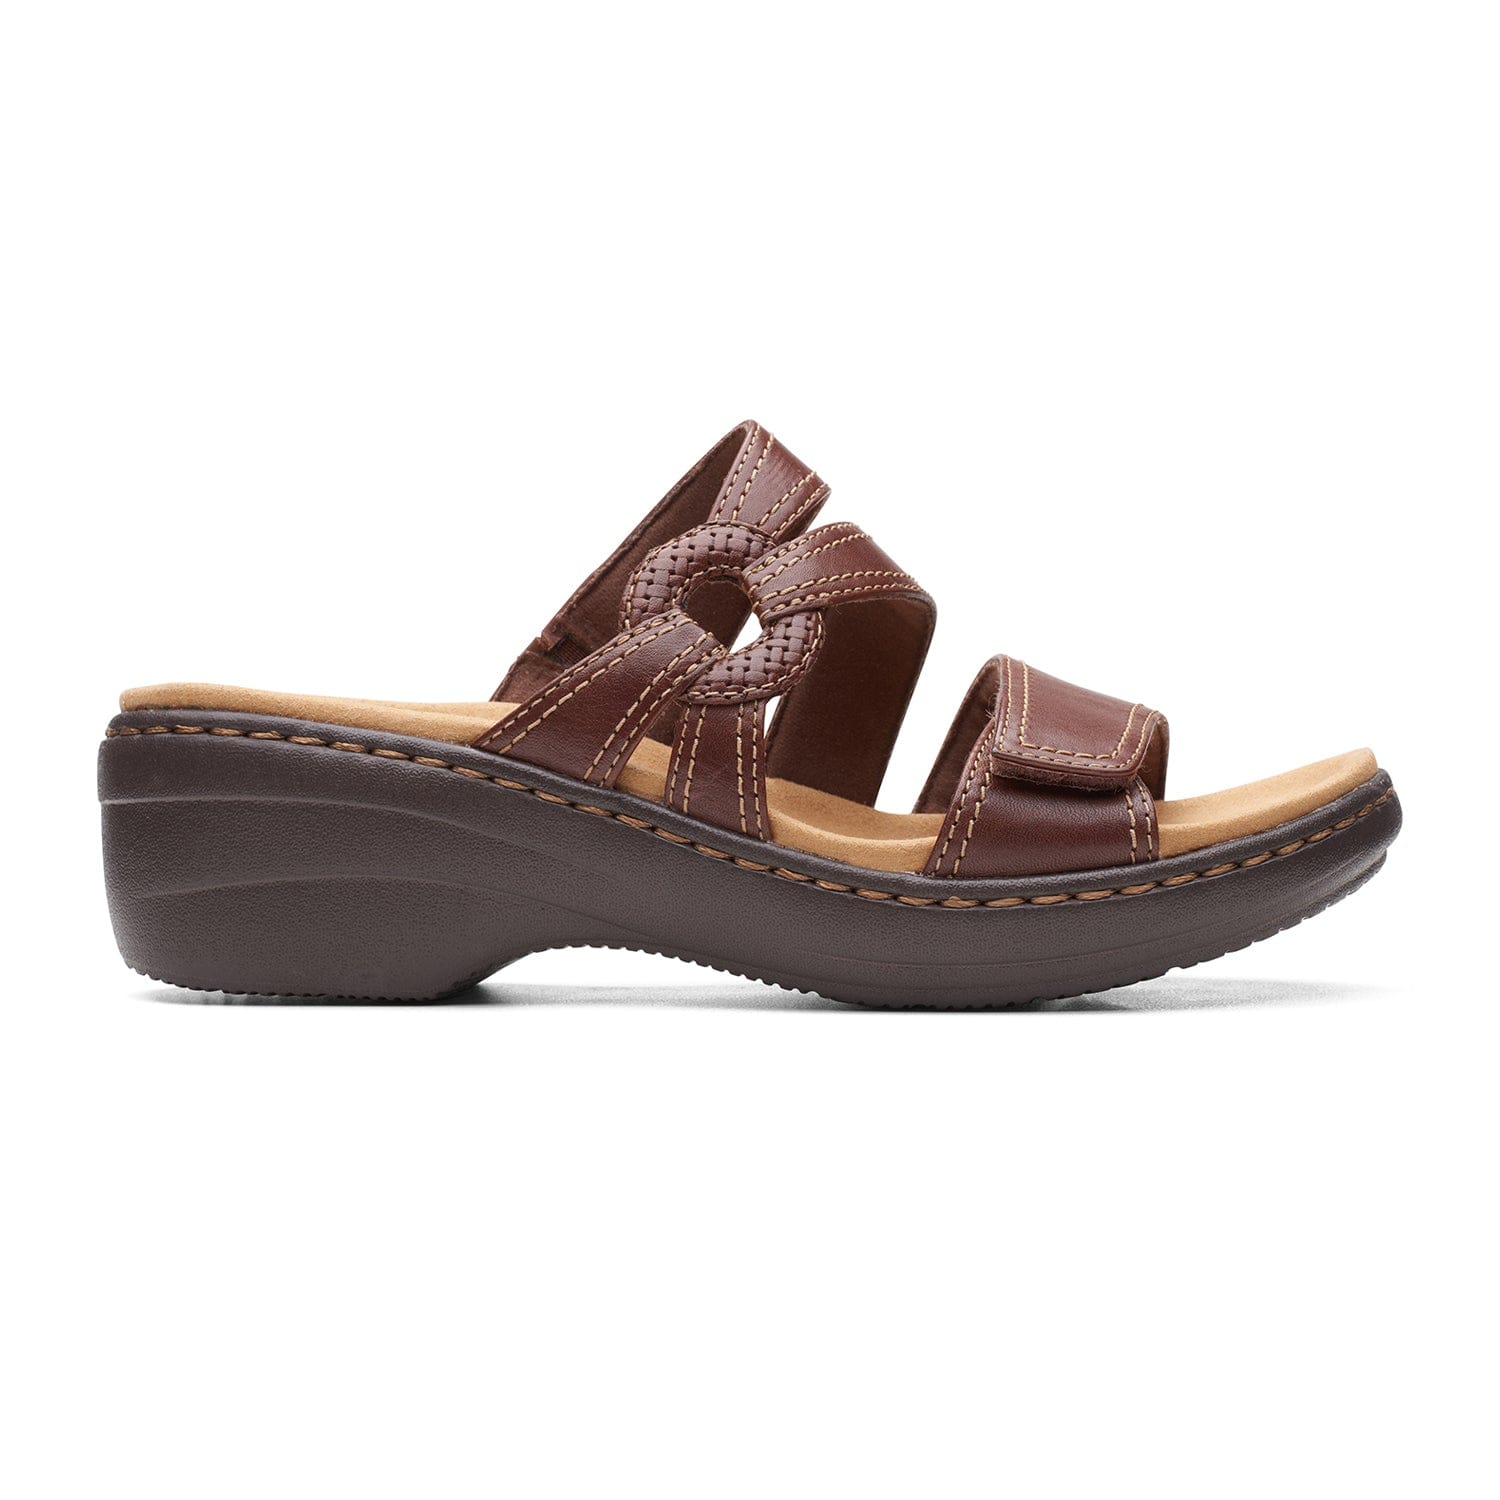 Clarks Merliah Coral Sandals - Dark Tan Leather - 261649624 - D Width (Standard Fit)